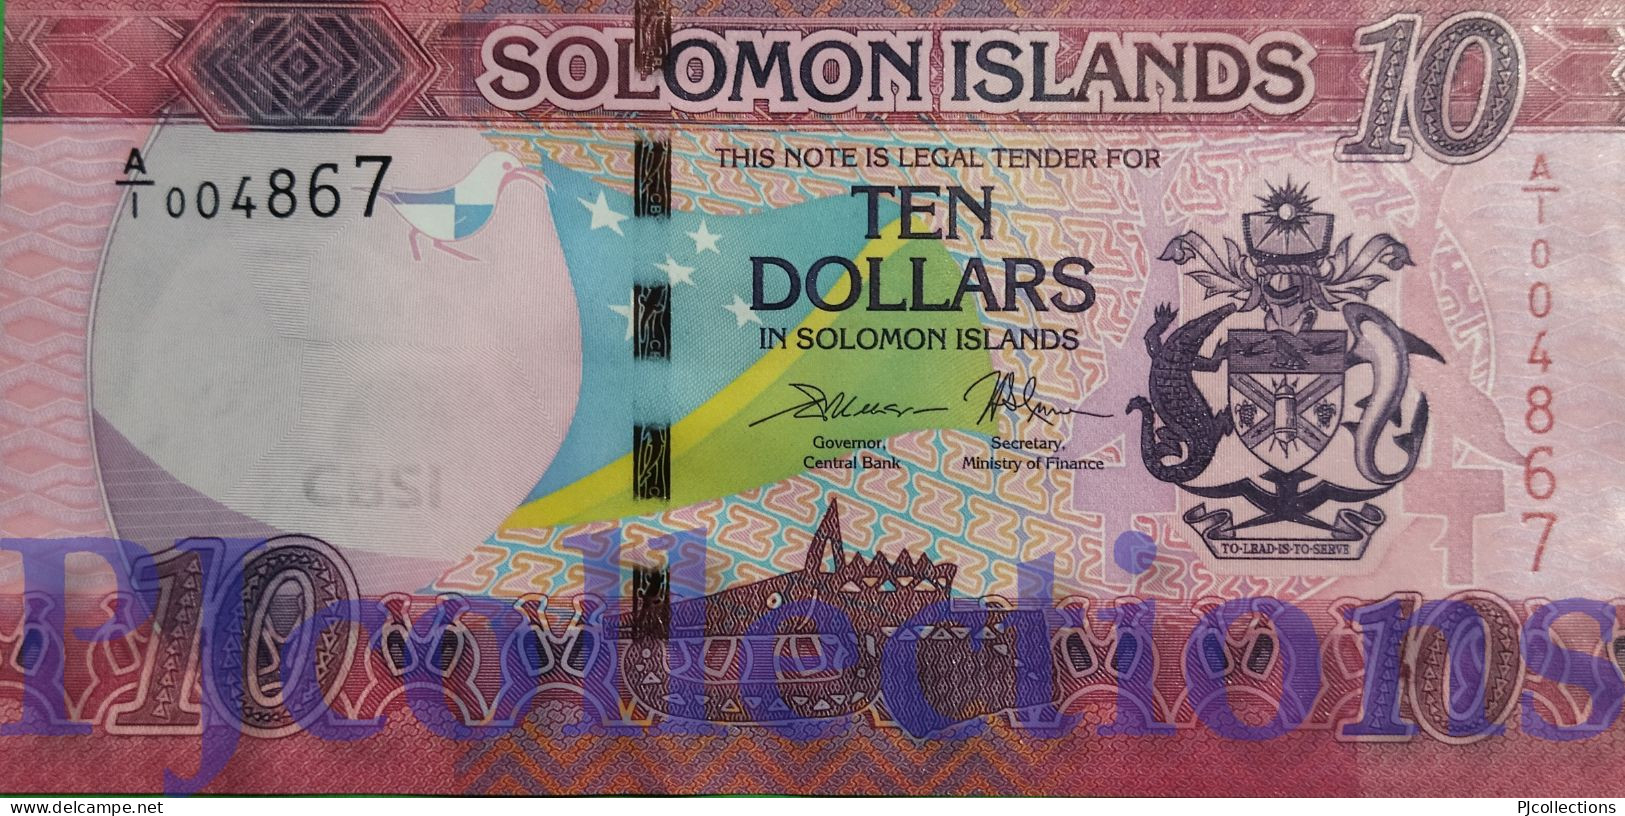 SOLOMON ISLANDS 10 DOLLARS 2017 PICK 33 UNC LOW SERIAL NUMBER "A/1 0048**" - Isla Salomon